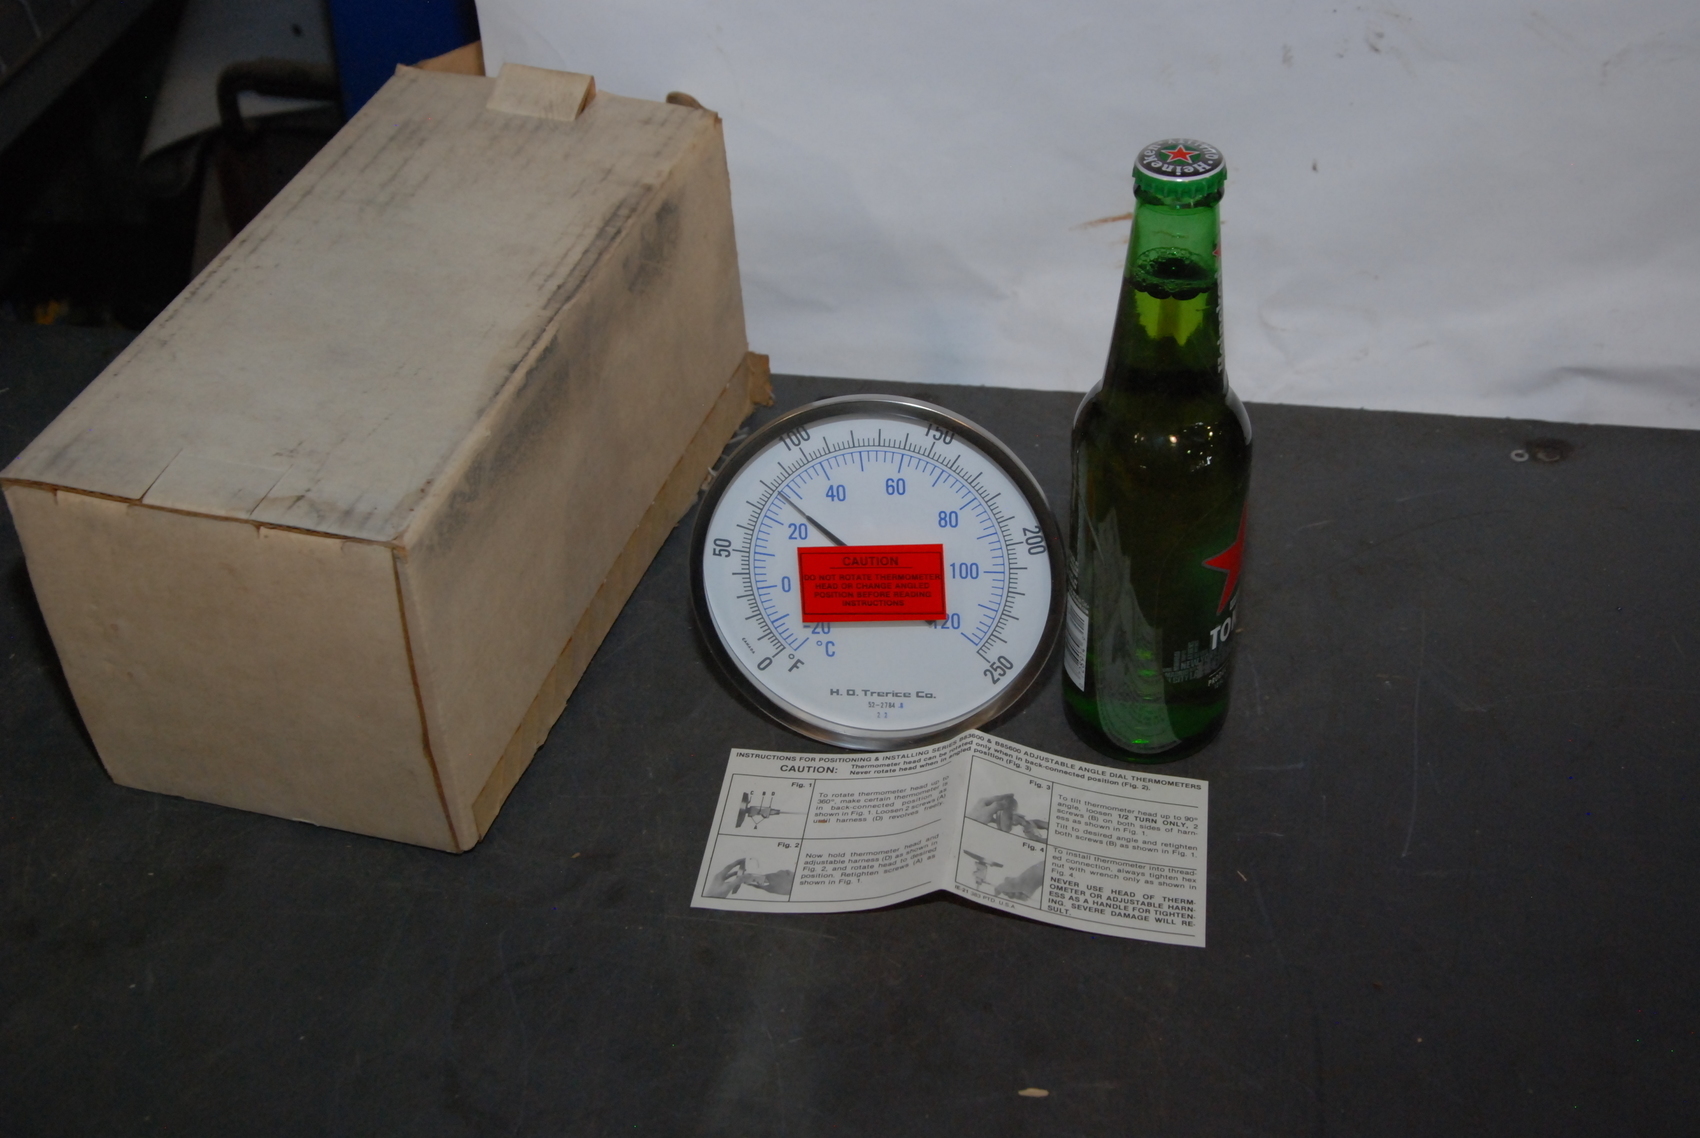 NEW H.O.Trerice Co.52-2784.0-250 Degree Bimetal Thermometer